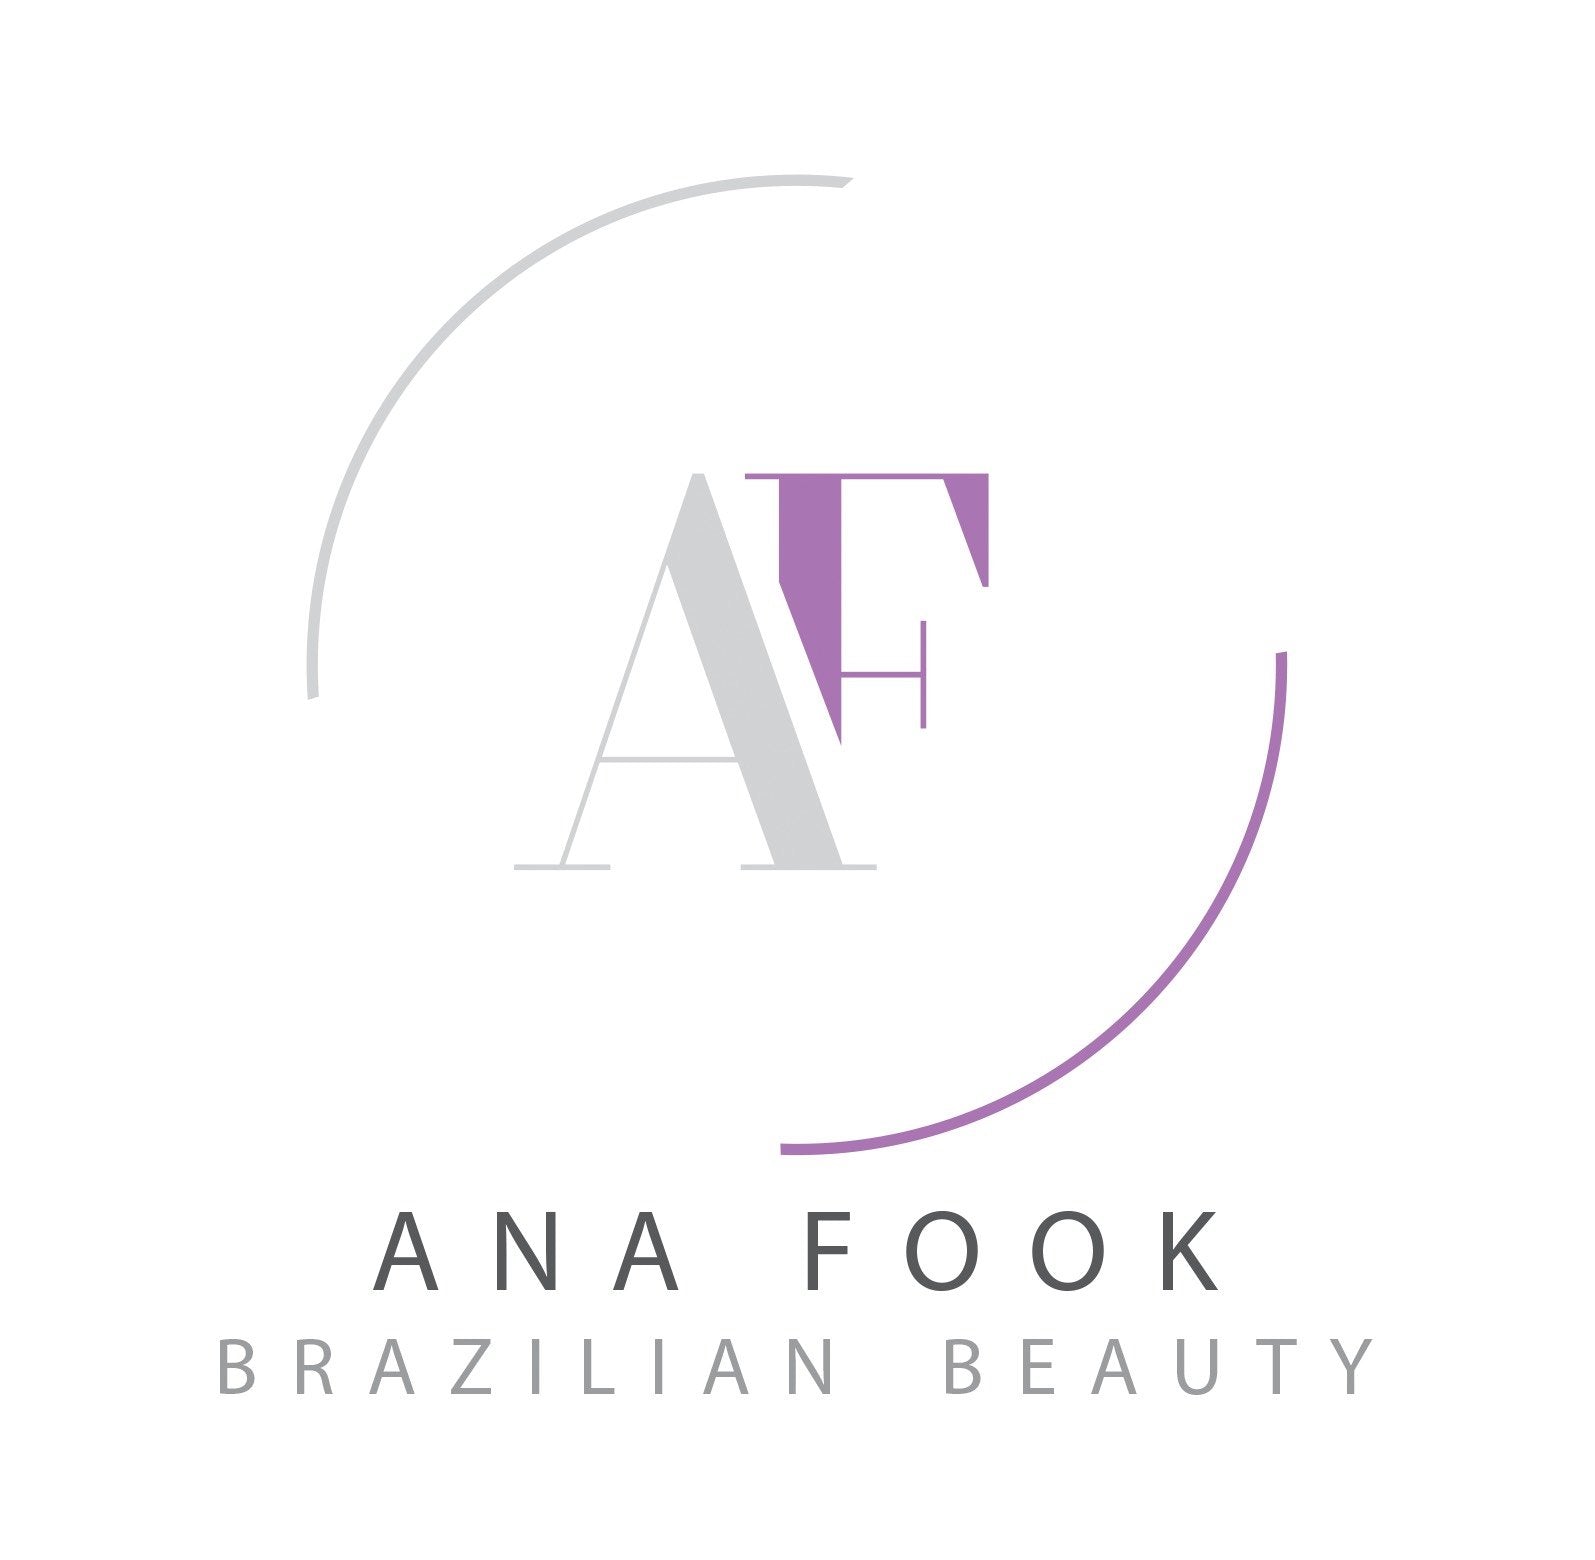 Brazilian Beauty Ana Fook